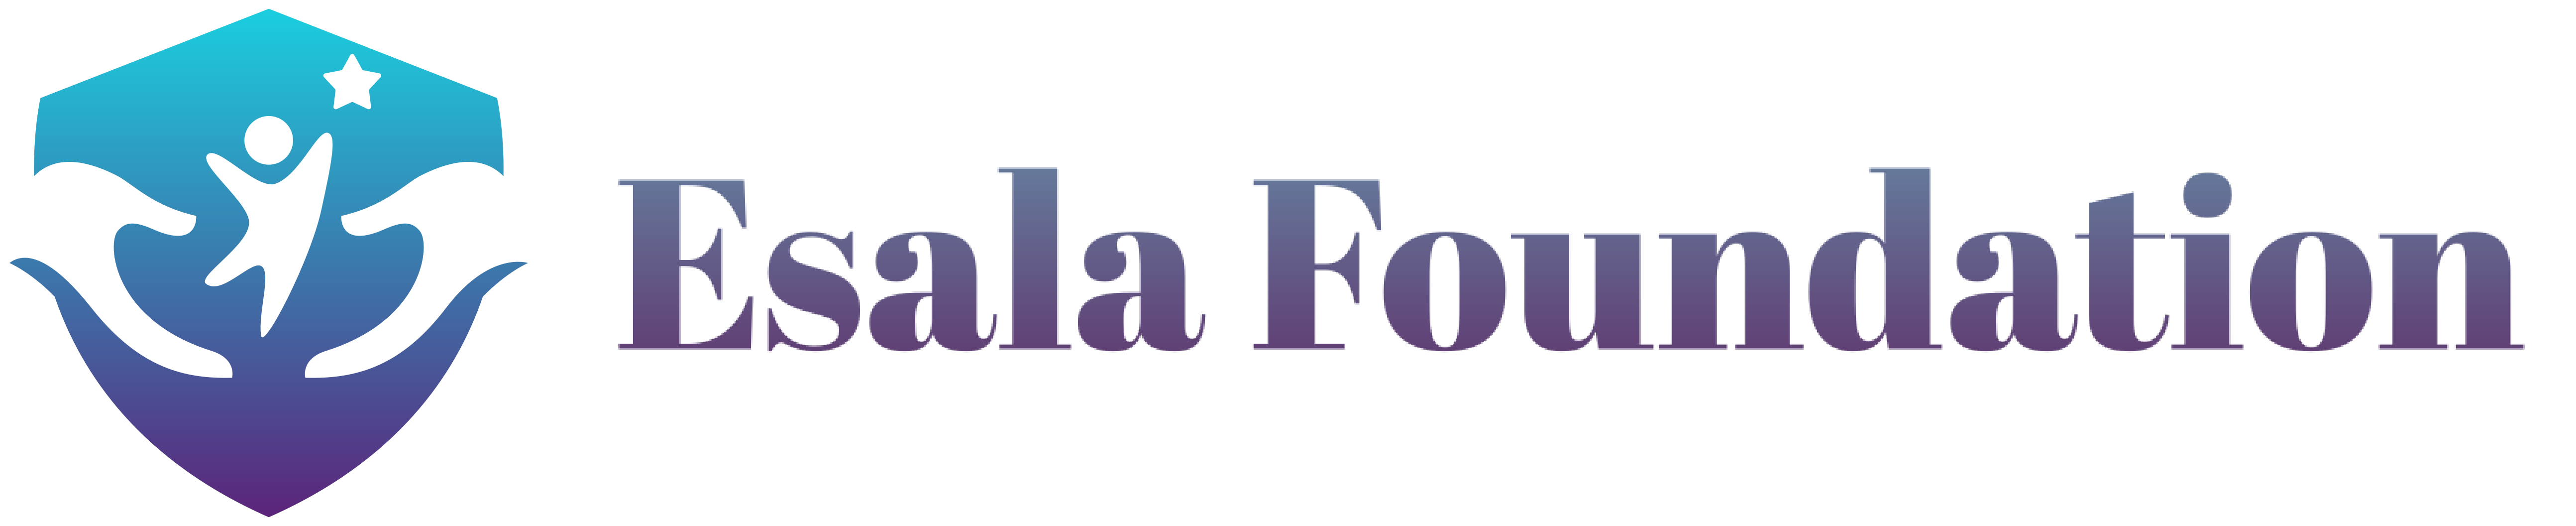 Esala Foundation logo